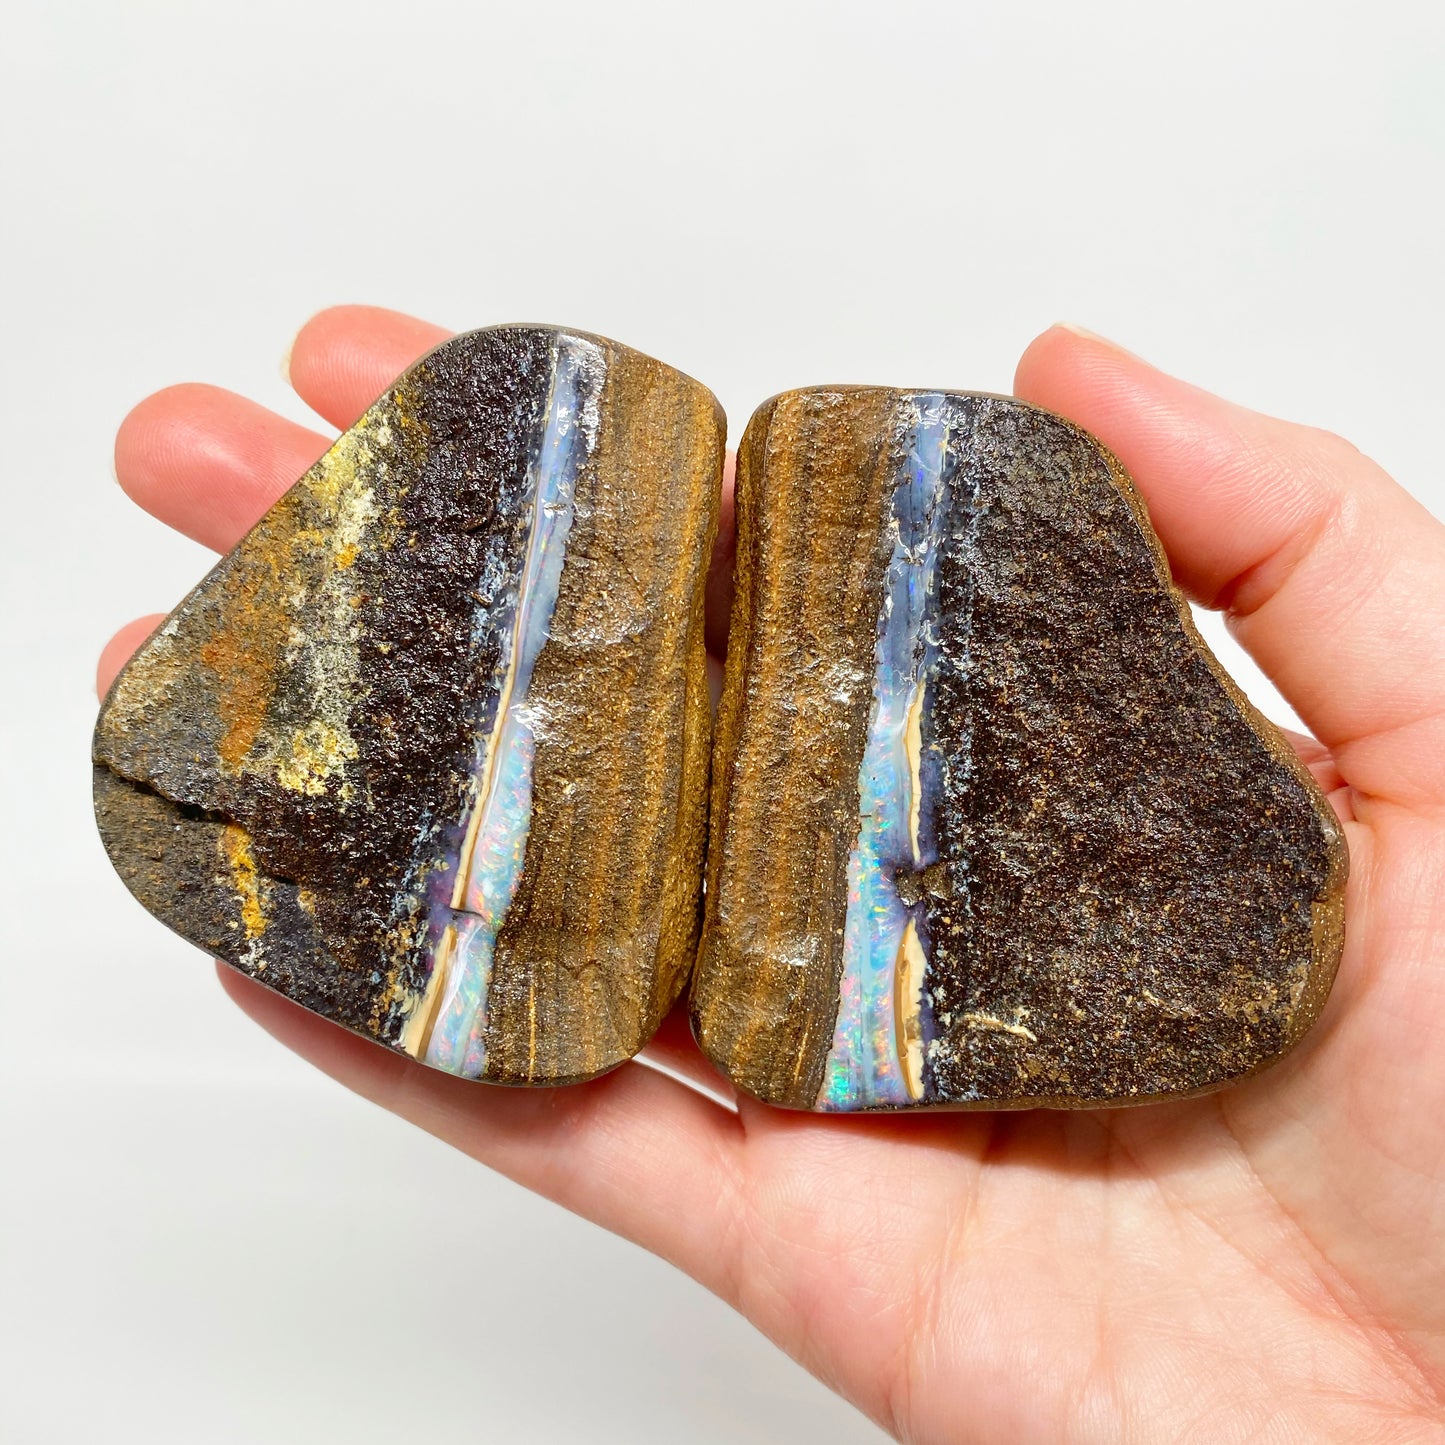 945 Ct large boulder opal 'split' specimen pair